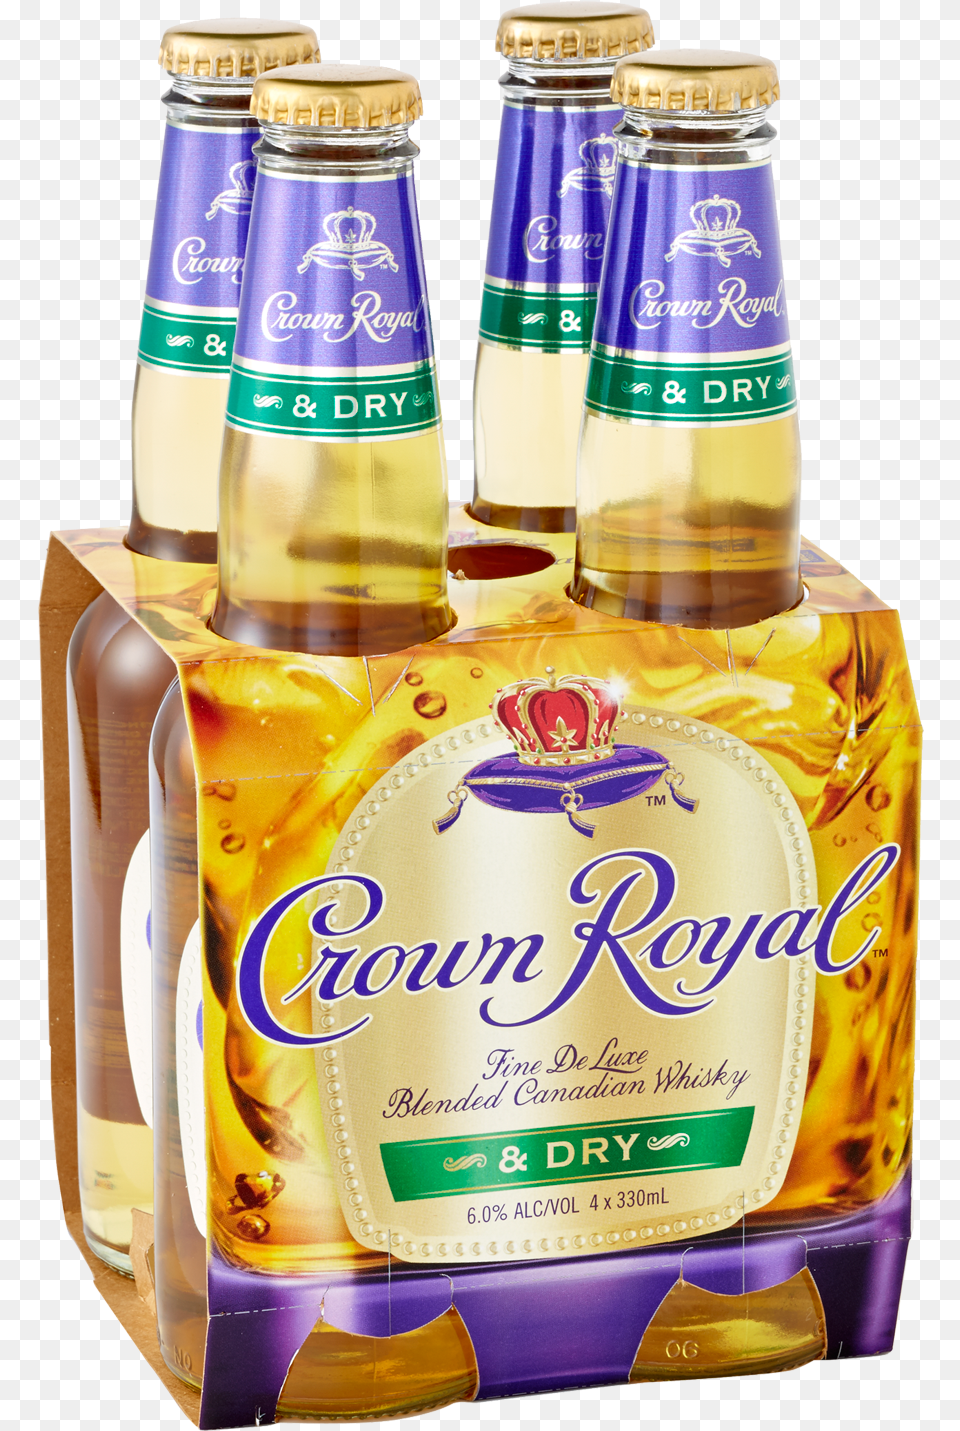 Crown Royal Whisky Amp Dry 330ml 4 Pack Crown Royal, Alcohol, Beer, Beverage, Bottle Free Png Download